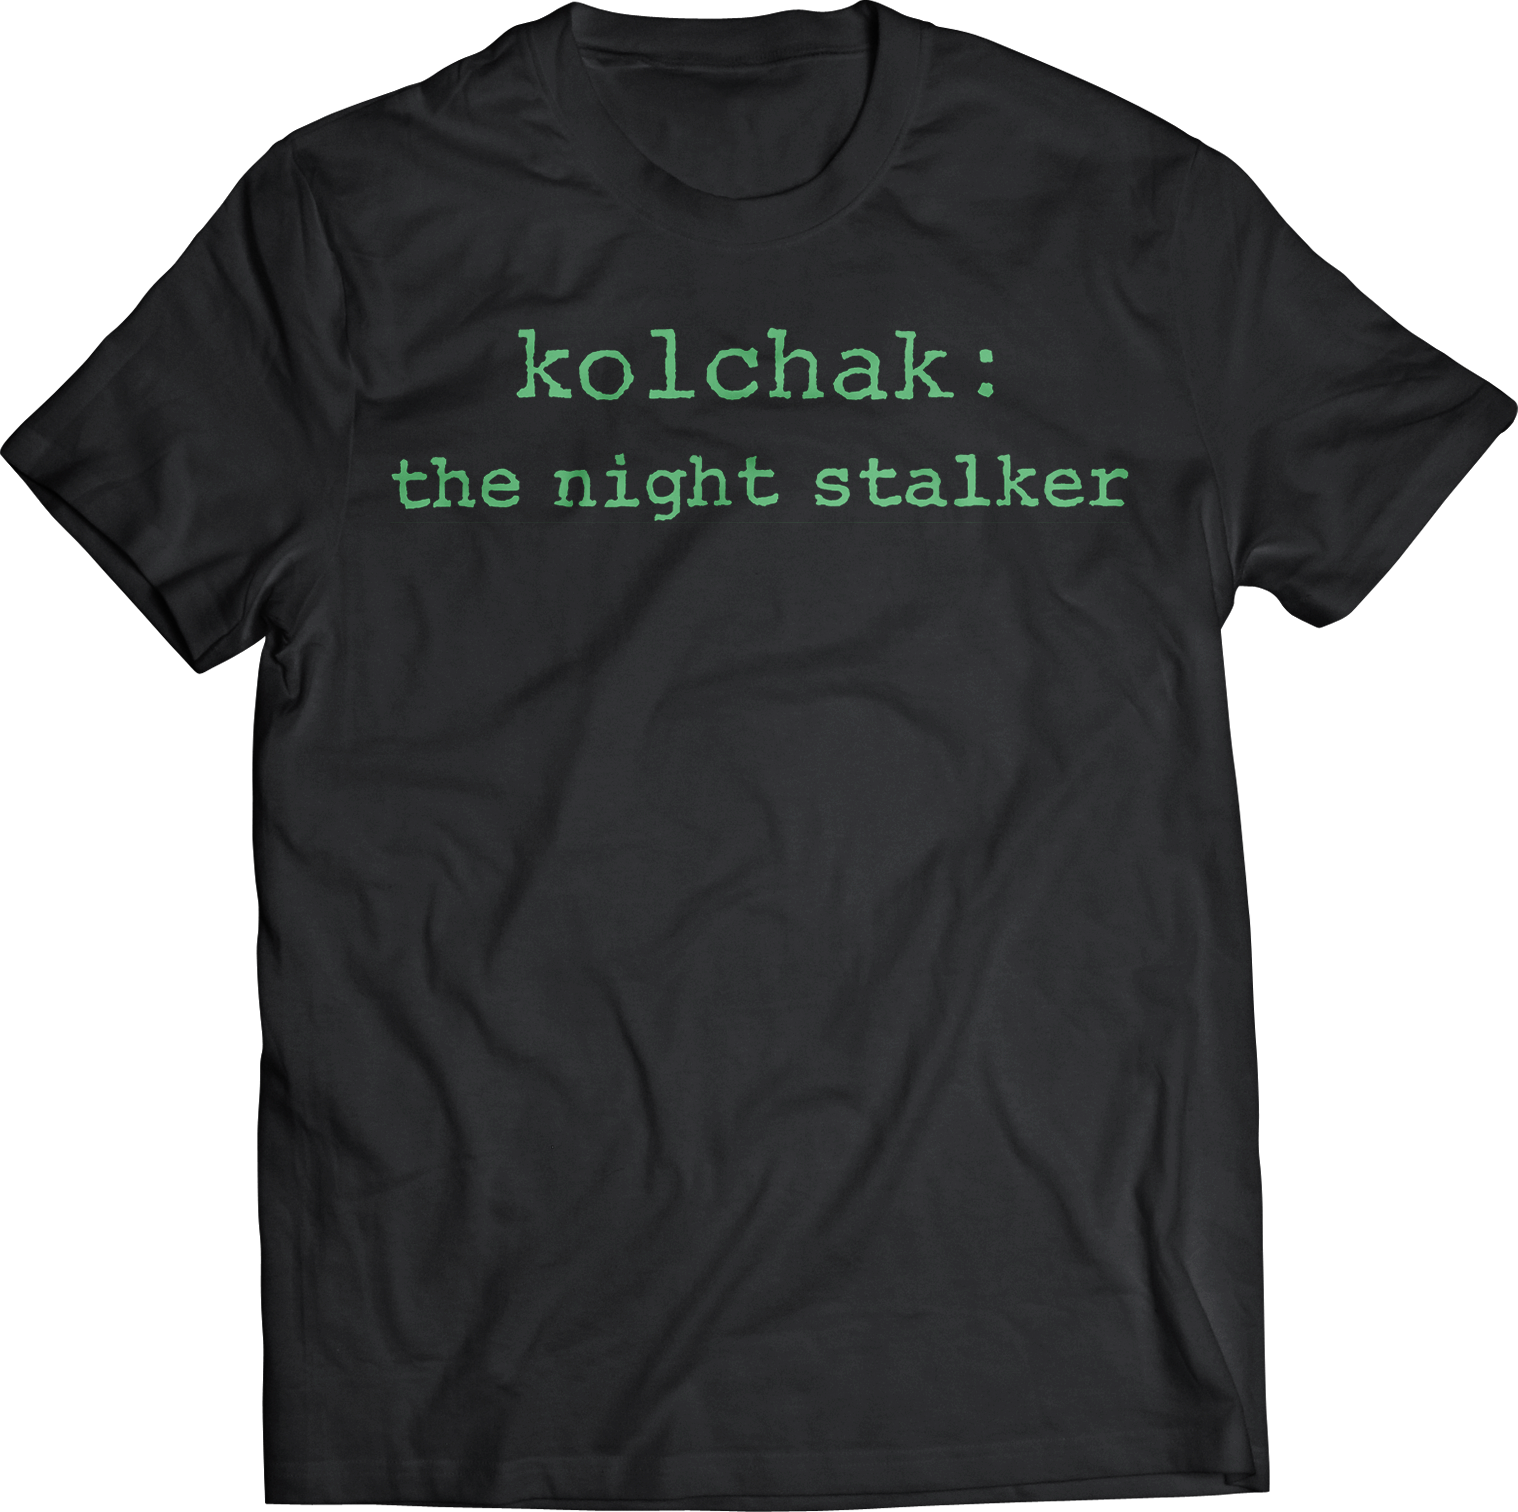 KOLCHAK: THE NIGHT STALKER:  "TV TITLE" T-SHIRT